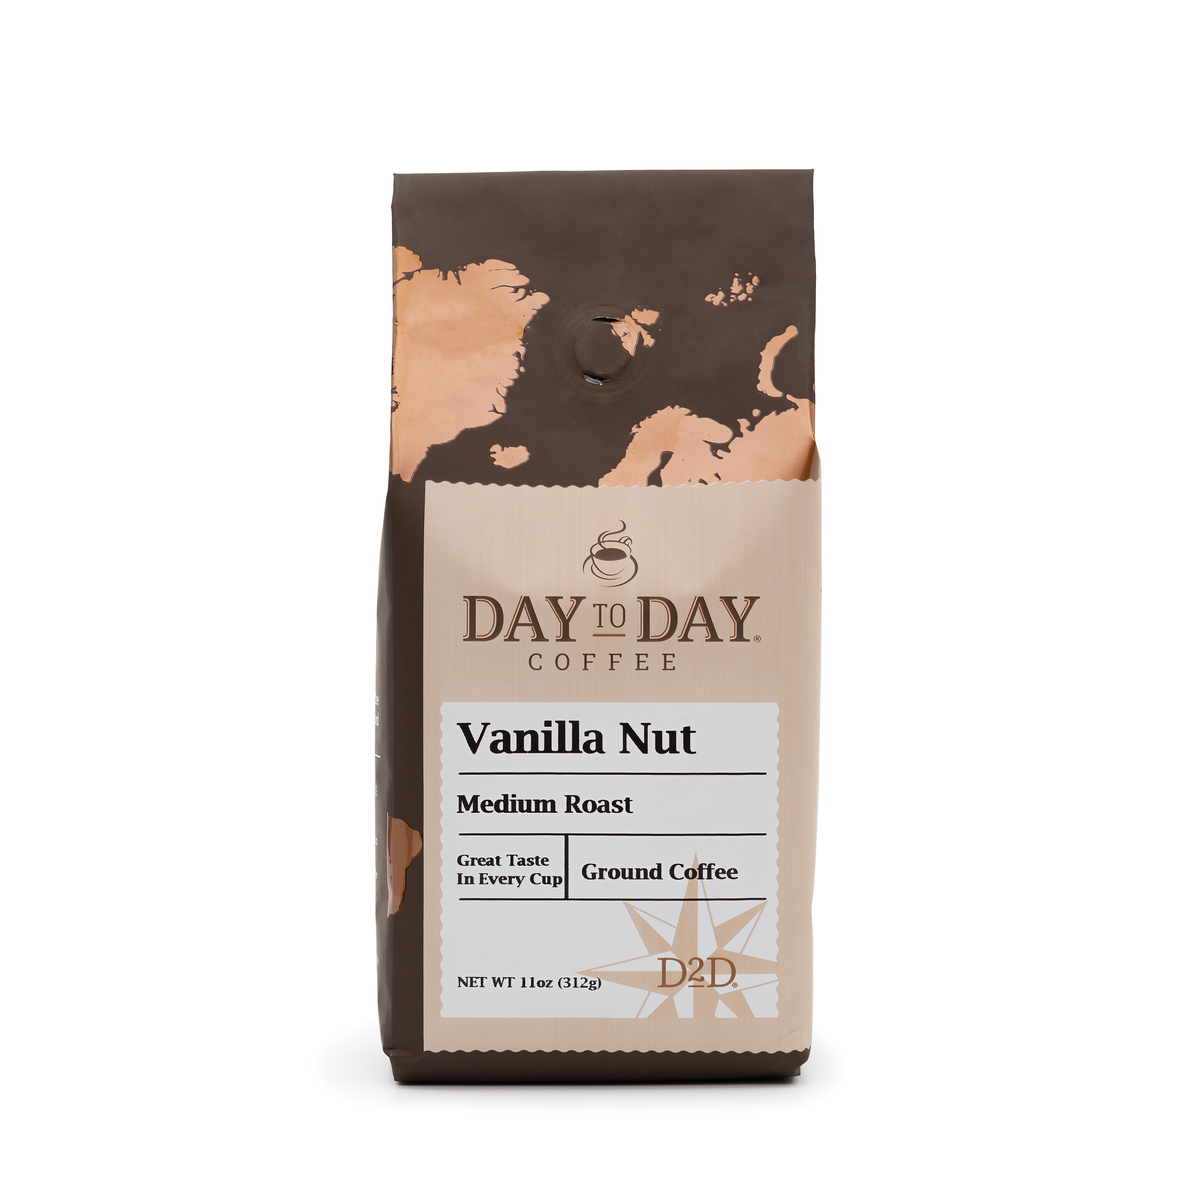 Day to day coffee 11oz vanilla nut medium roast ground coffee - 1